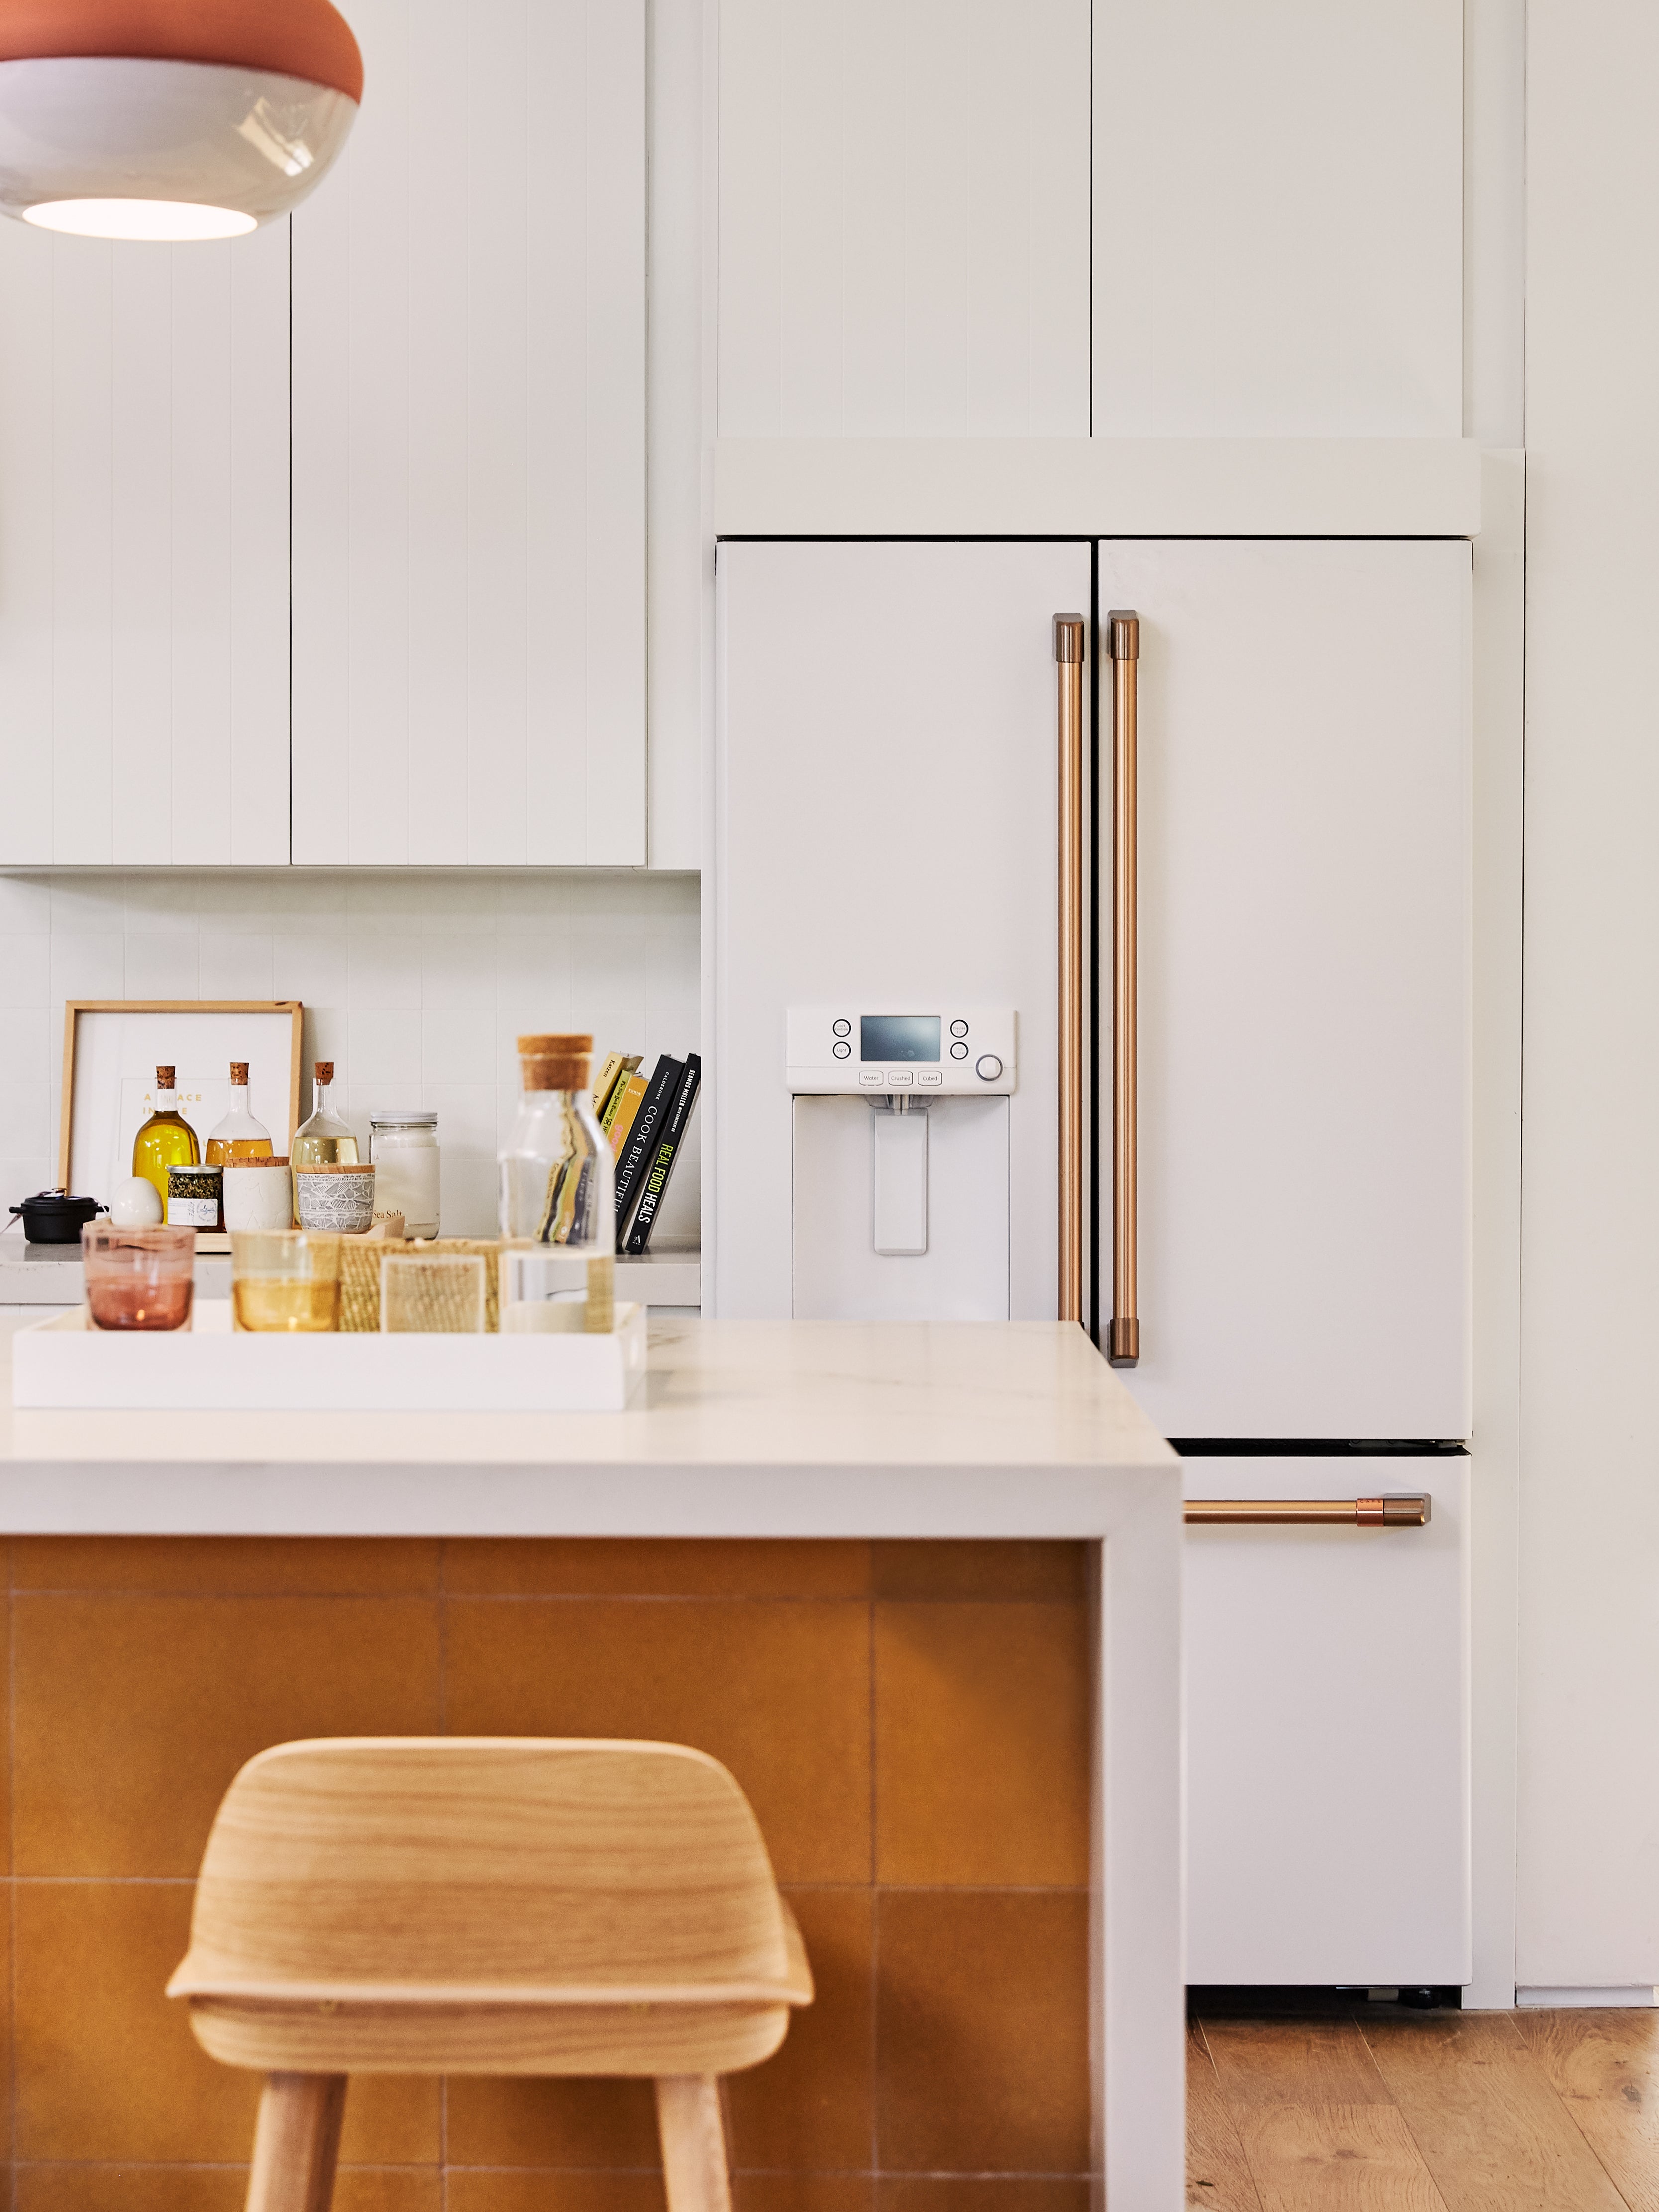 Every Appliance Inside Garance Doré’s Kitchen Is Customizable